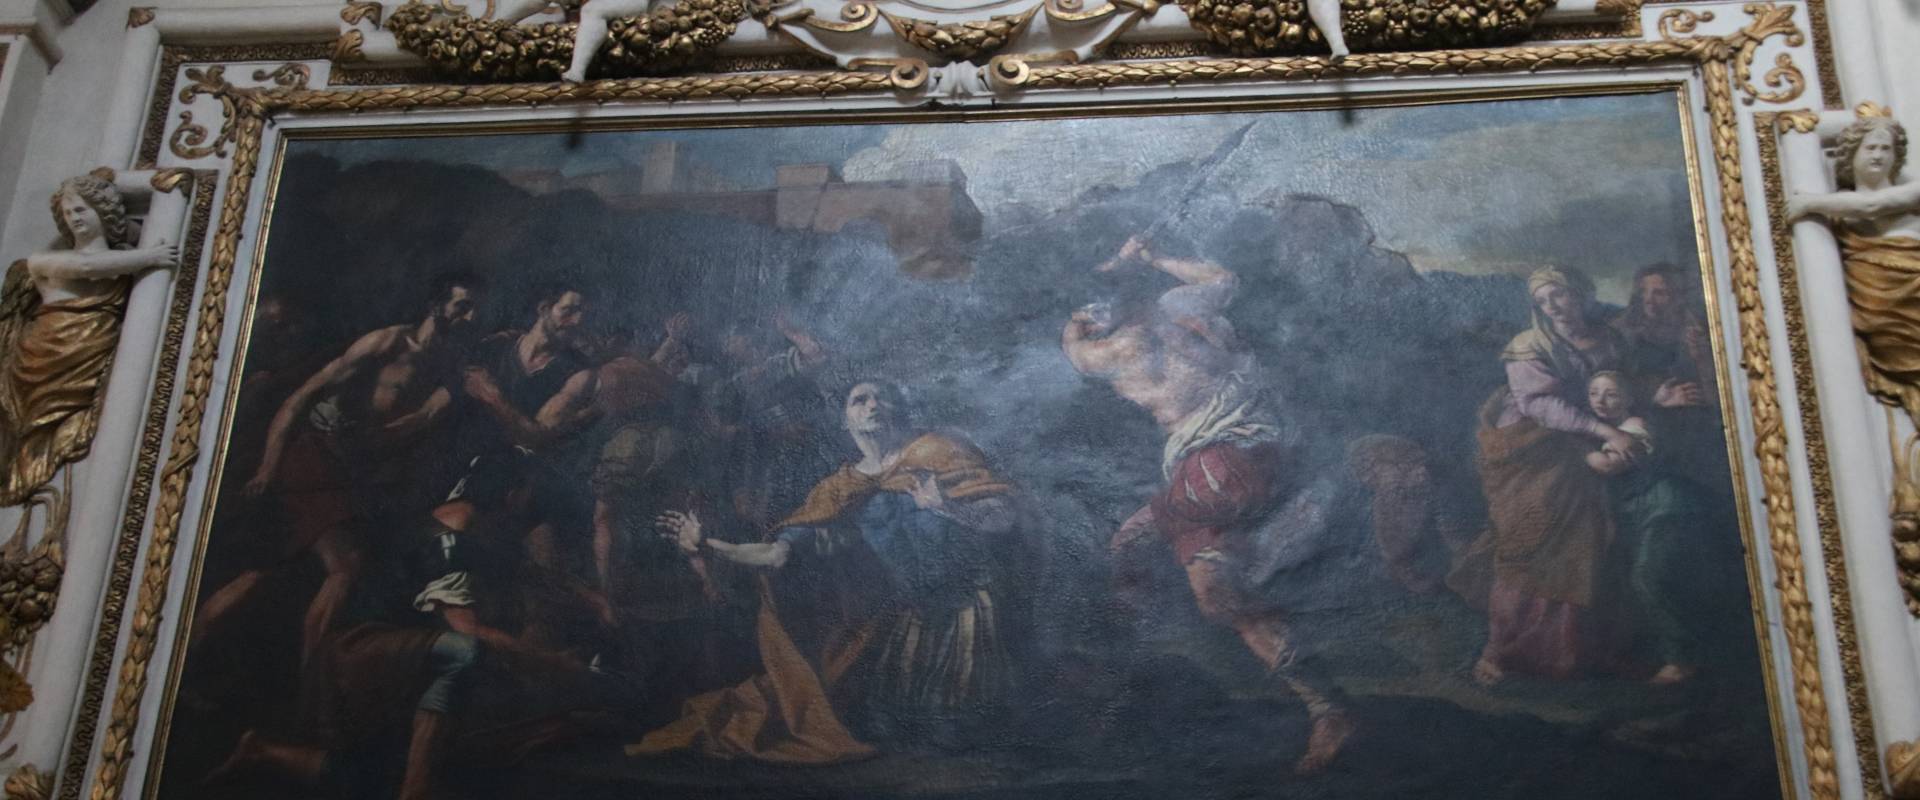 Robert la Longe, Storie di Sant'Antonino (1693) 06 photo by Mongolo1984